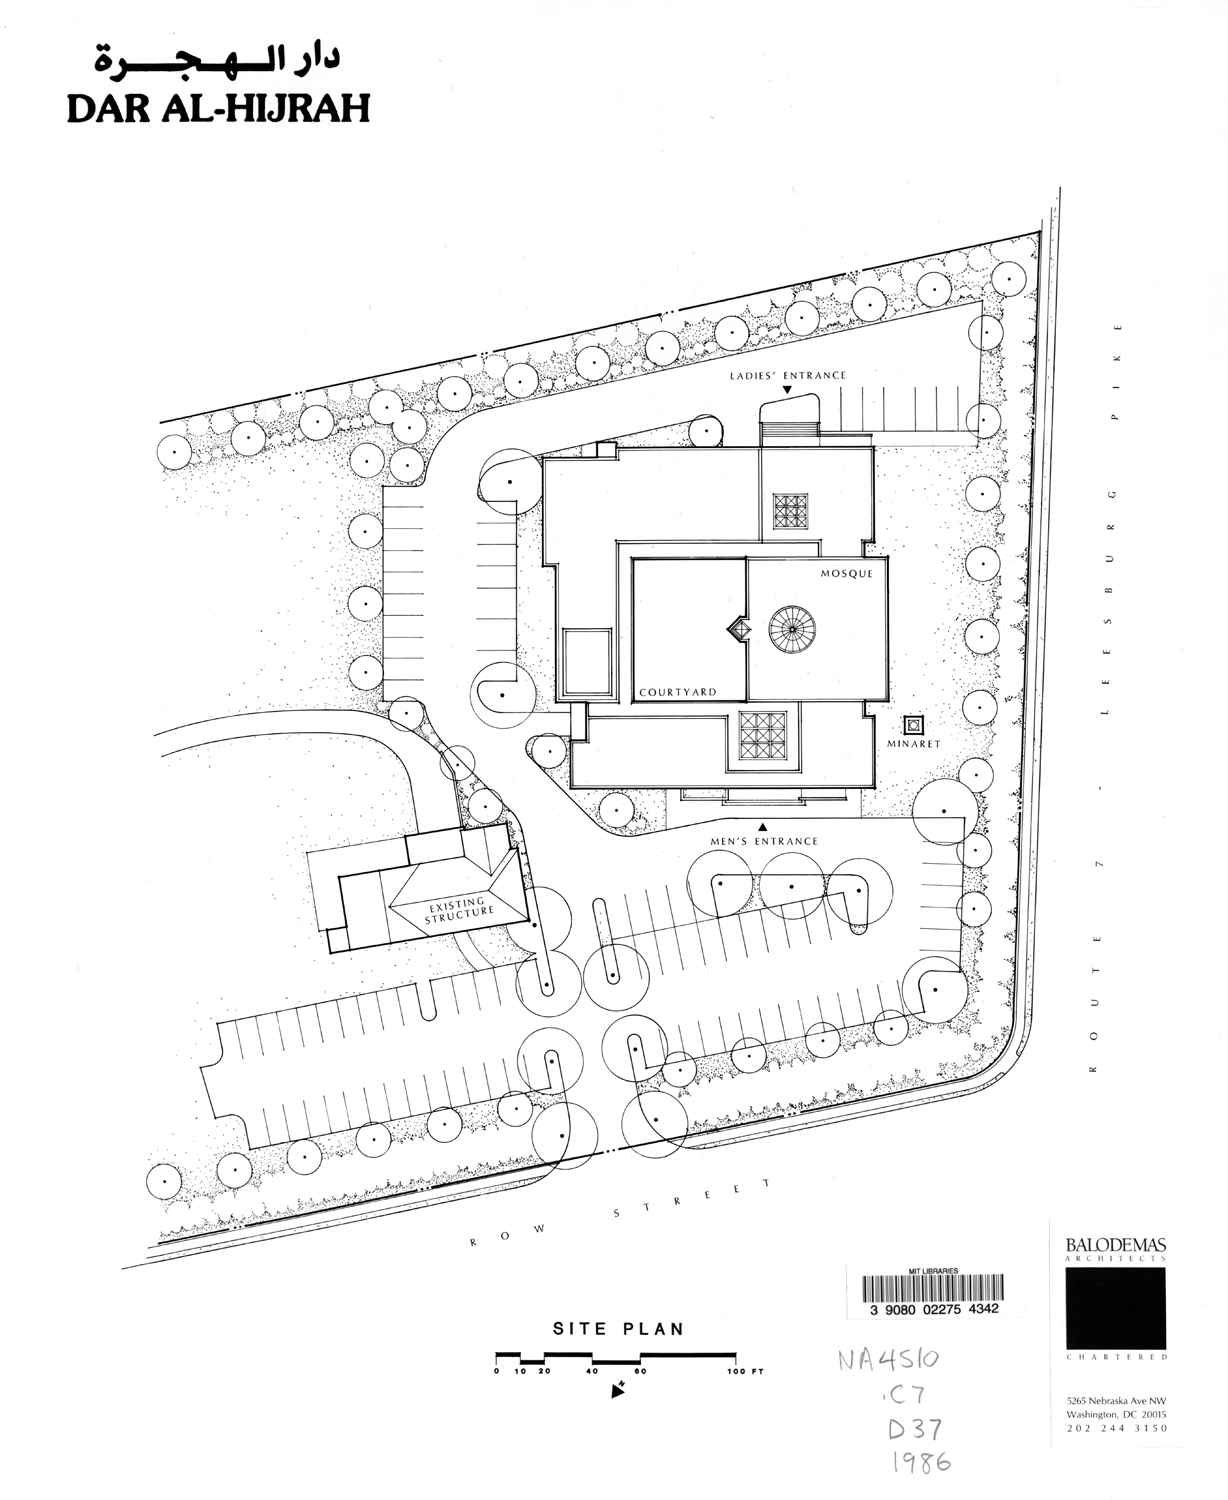 Dar Al-Hijrah Islamic Center - Site plan